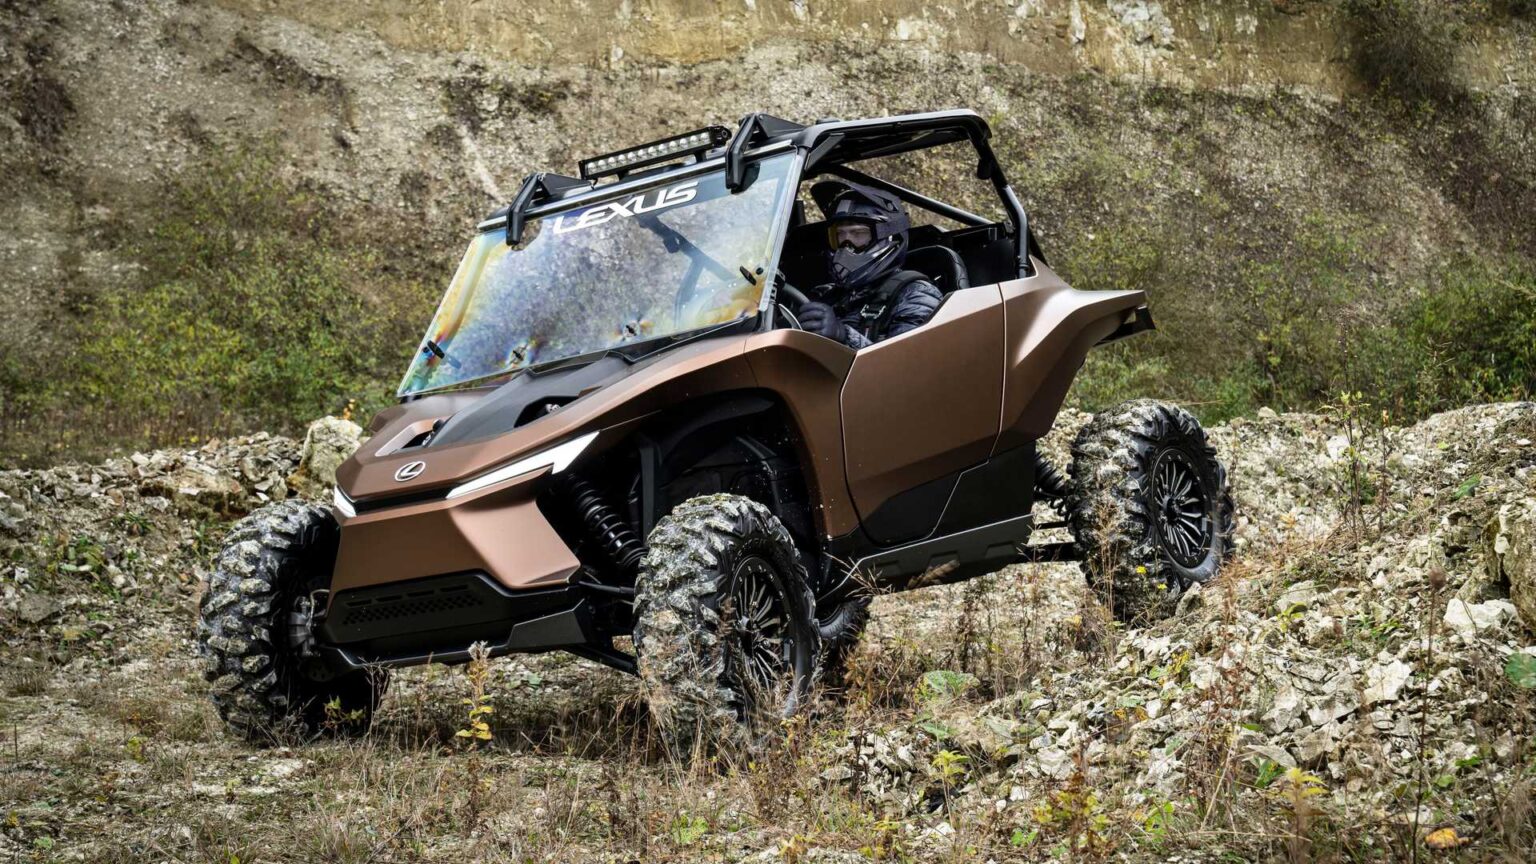 lexus-rov-recreational-off-highway-vehicle-concept-front-1536x864.jpg